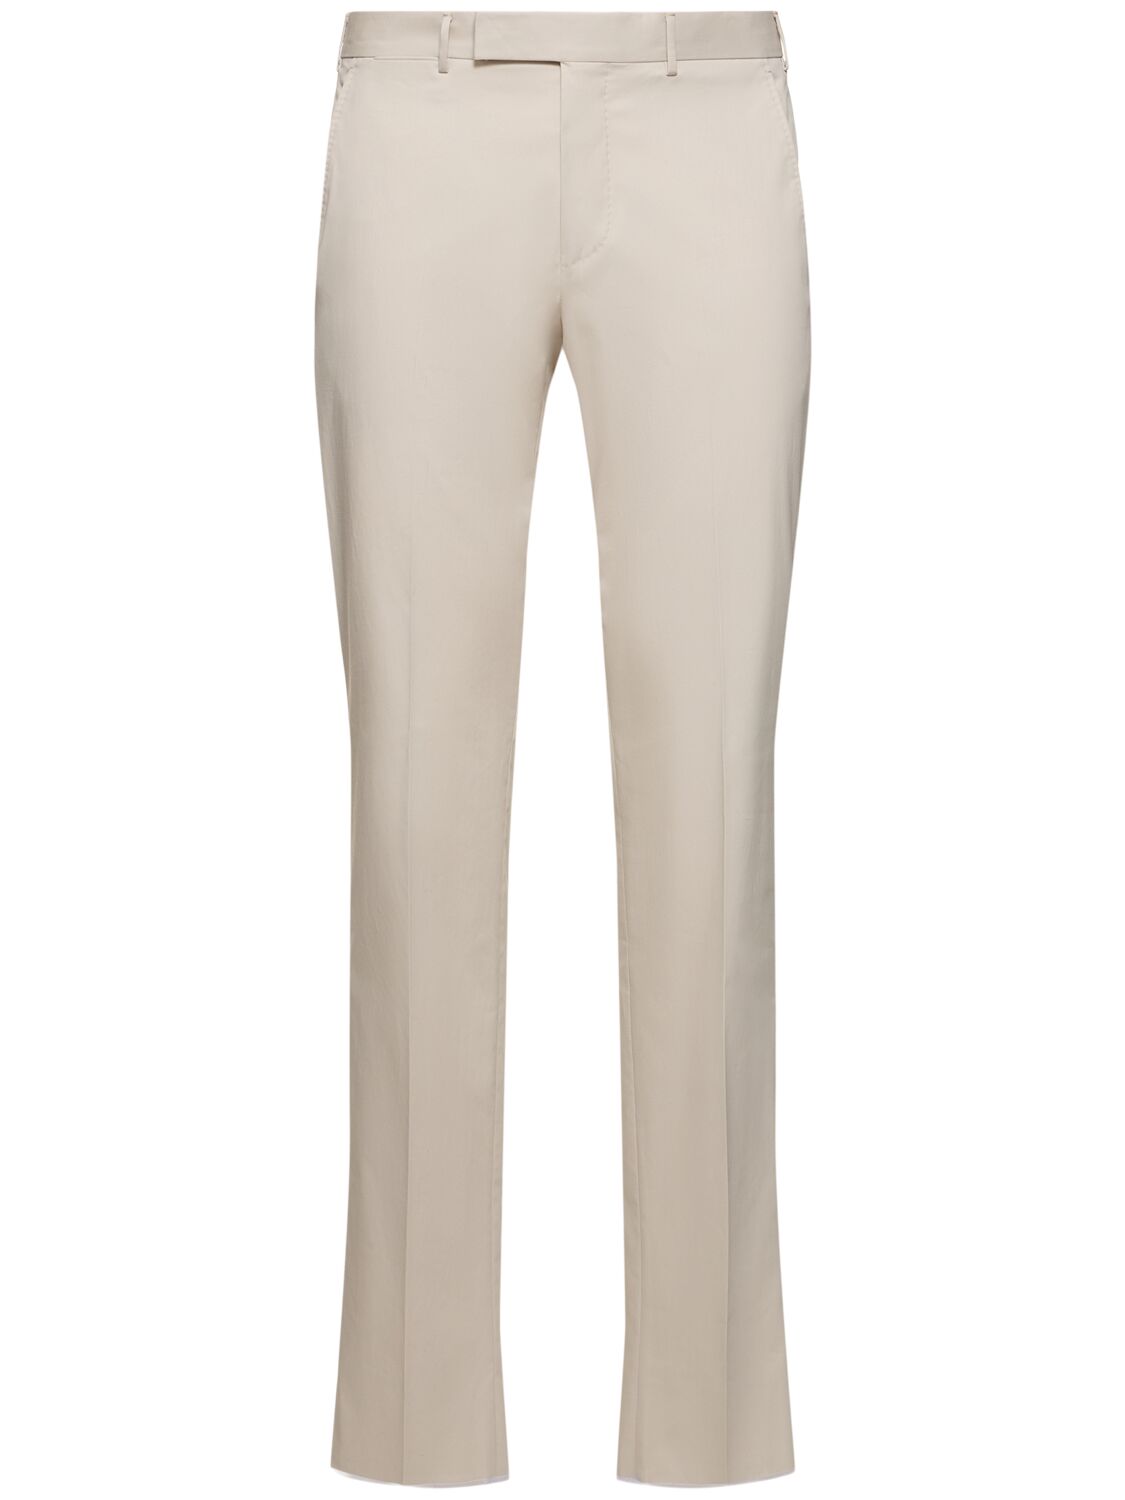 Image of Cotton Flat Front Slim Pants